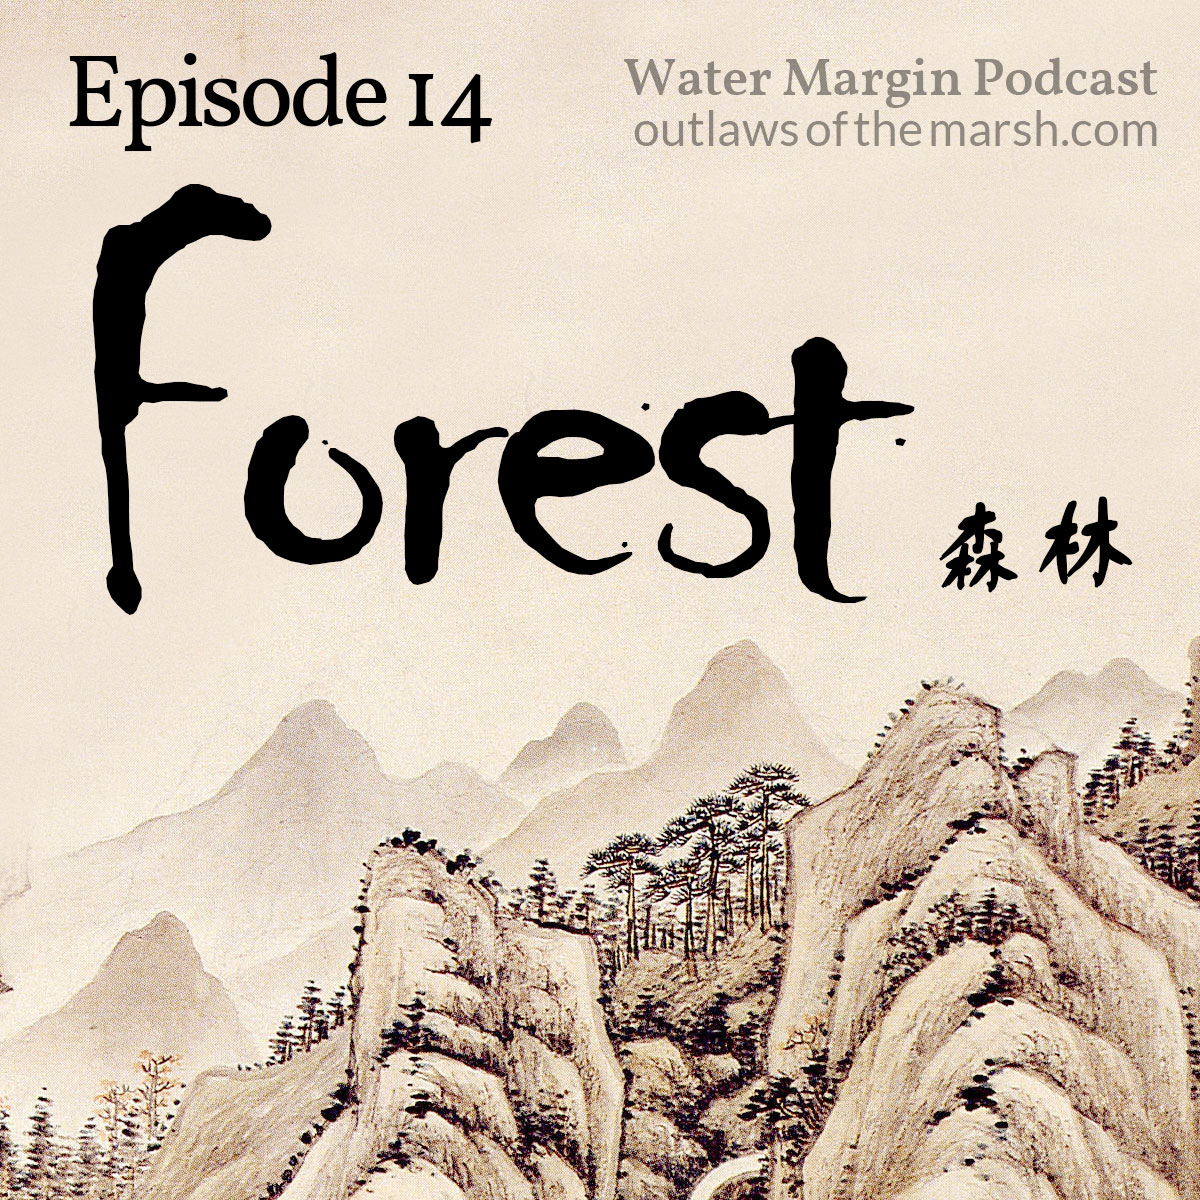 Water Margin Podcast: Episode 014